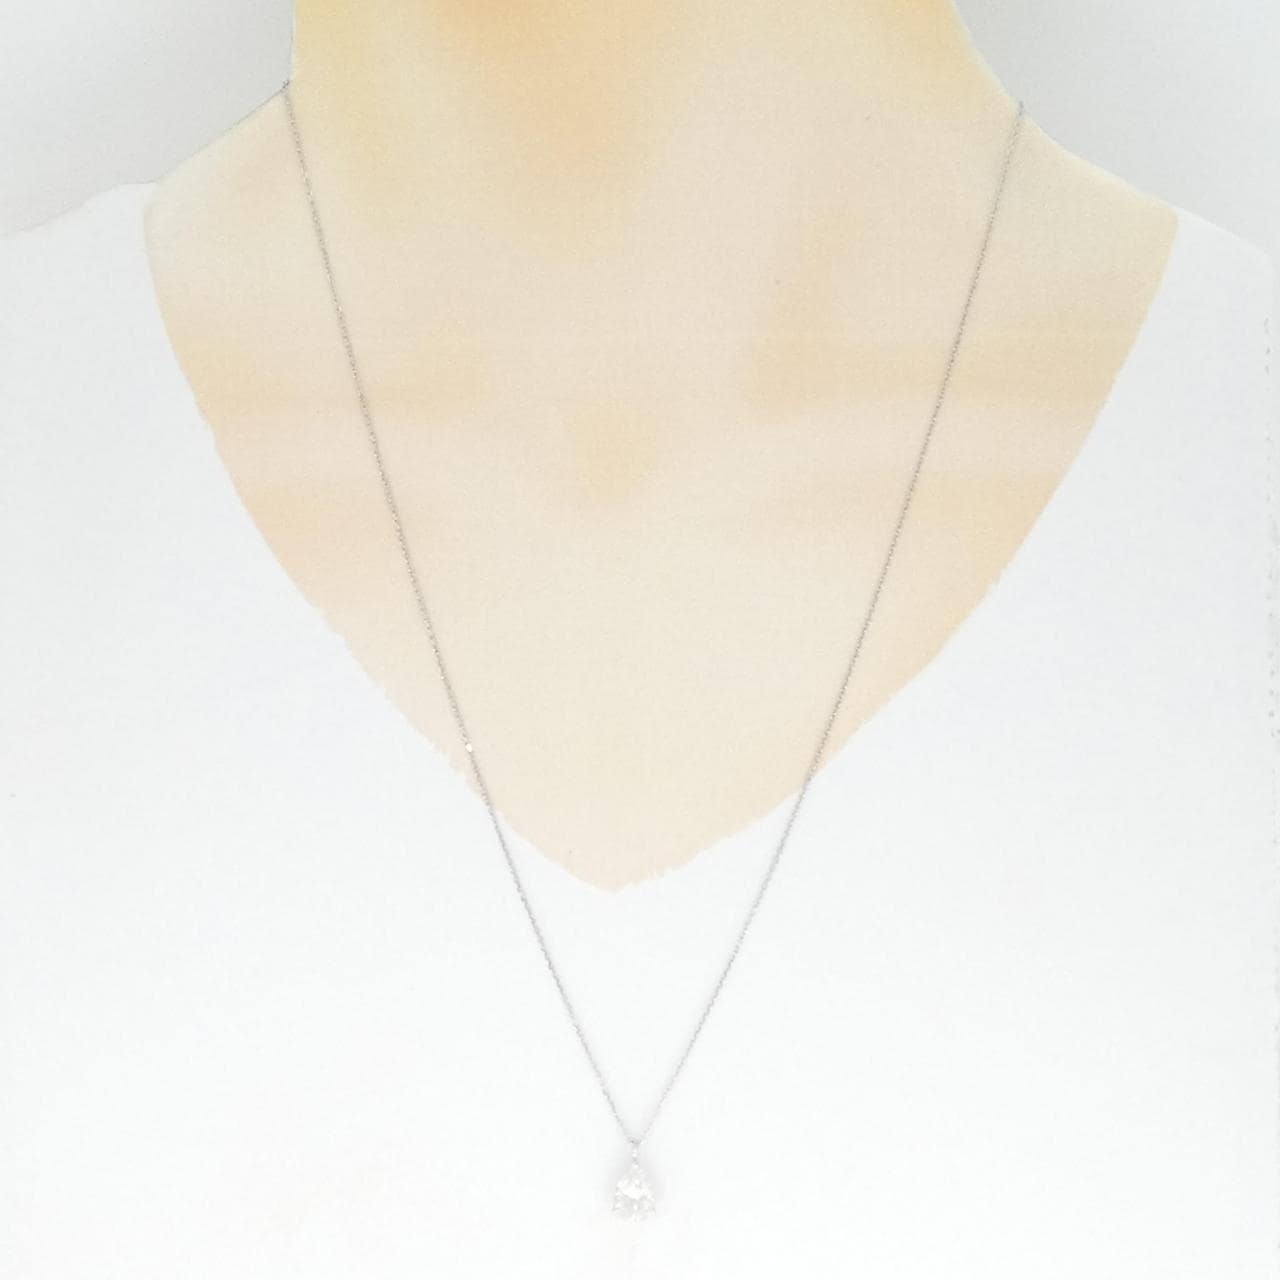 K18WG Diamond necklace 1.372CT H SI2 pear shape